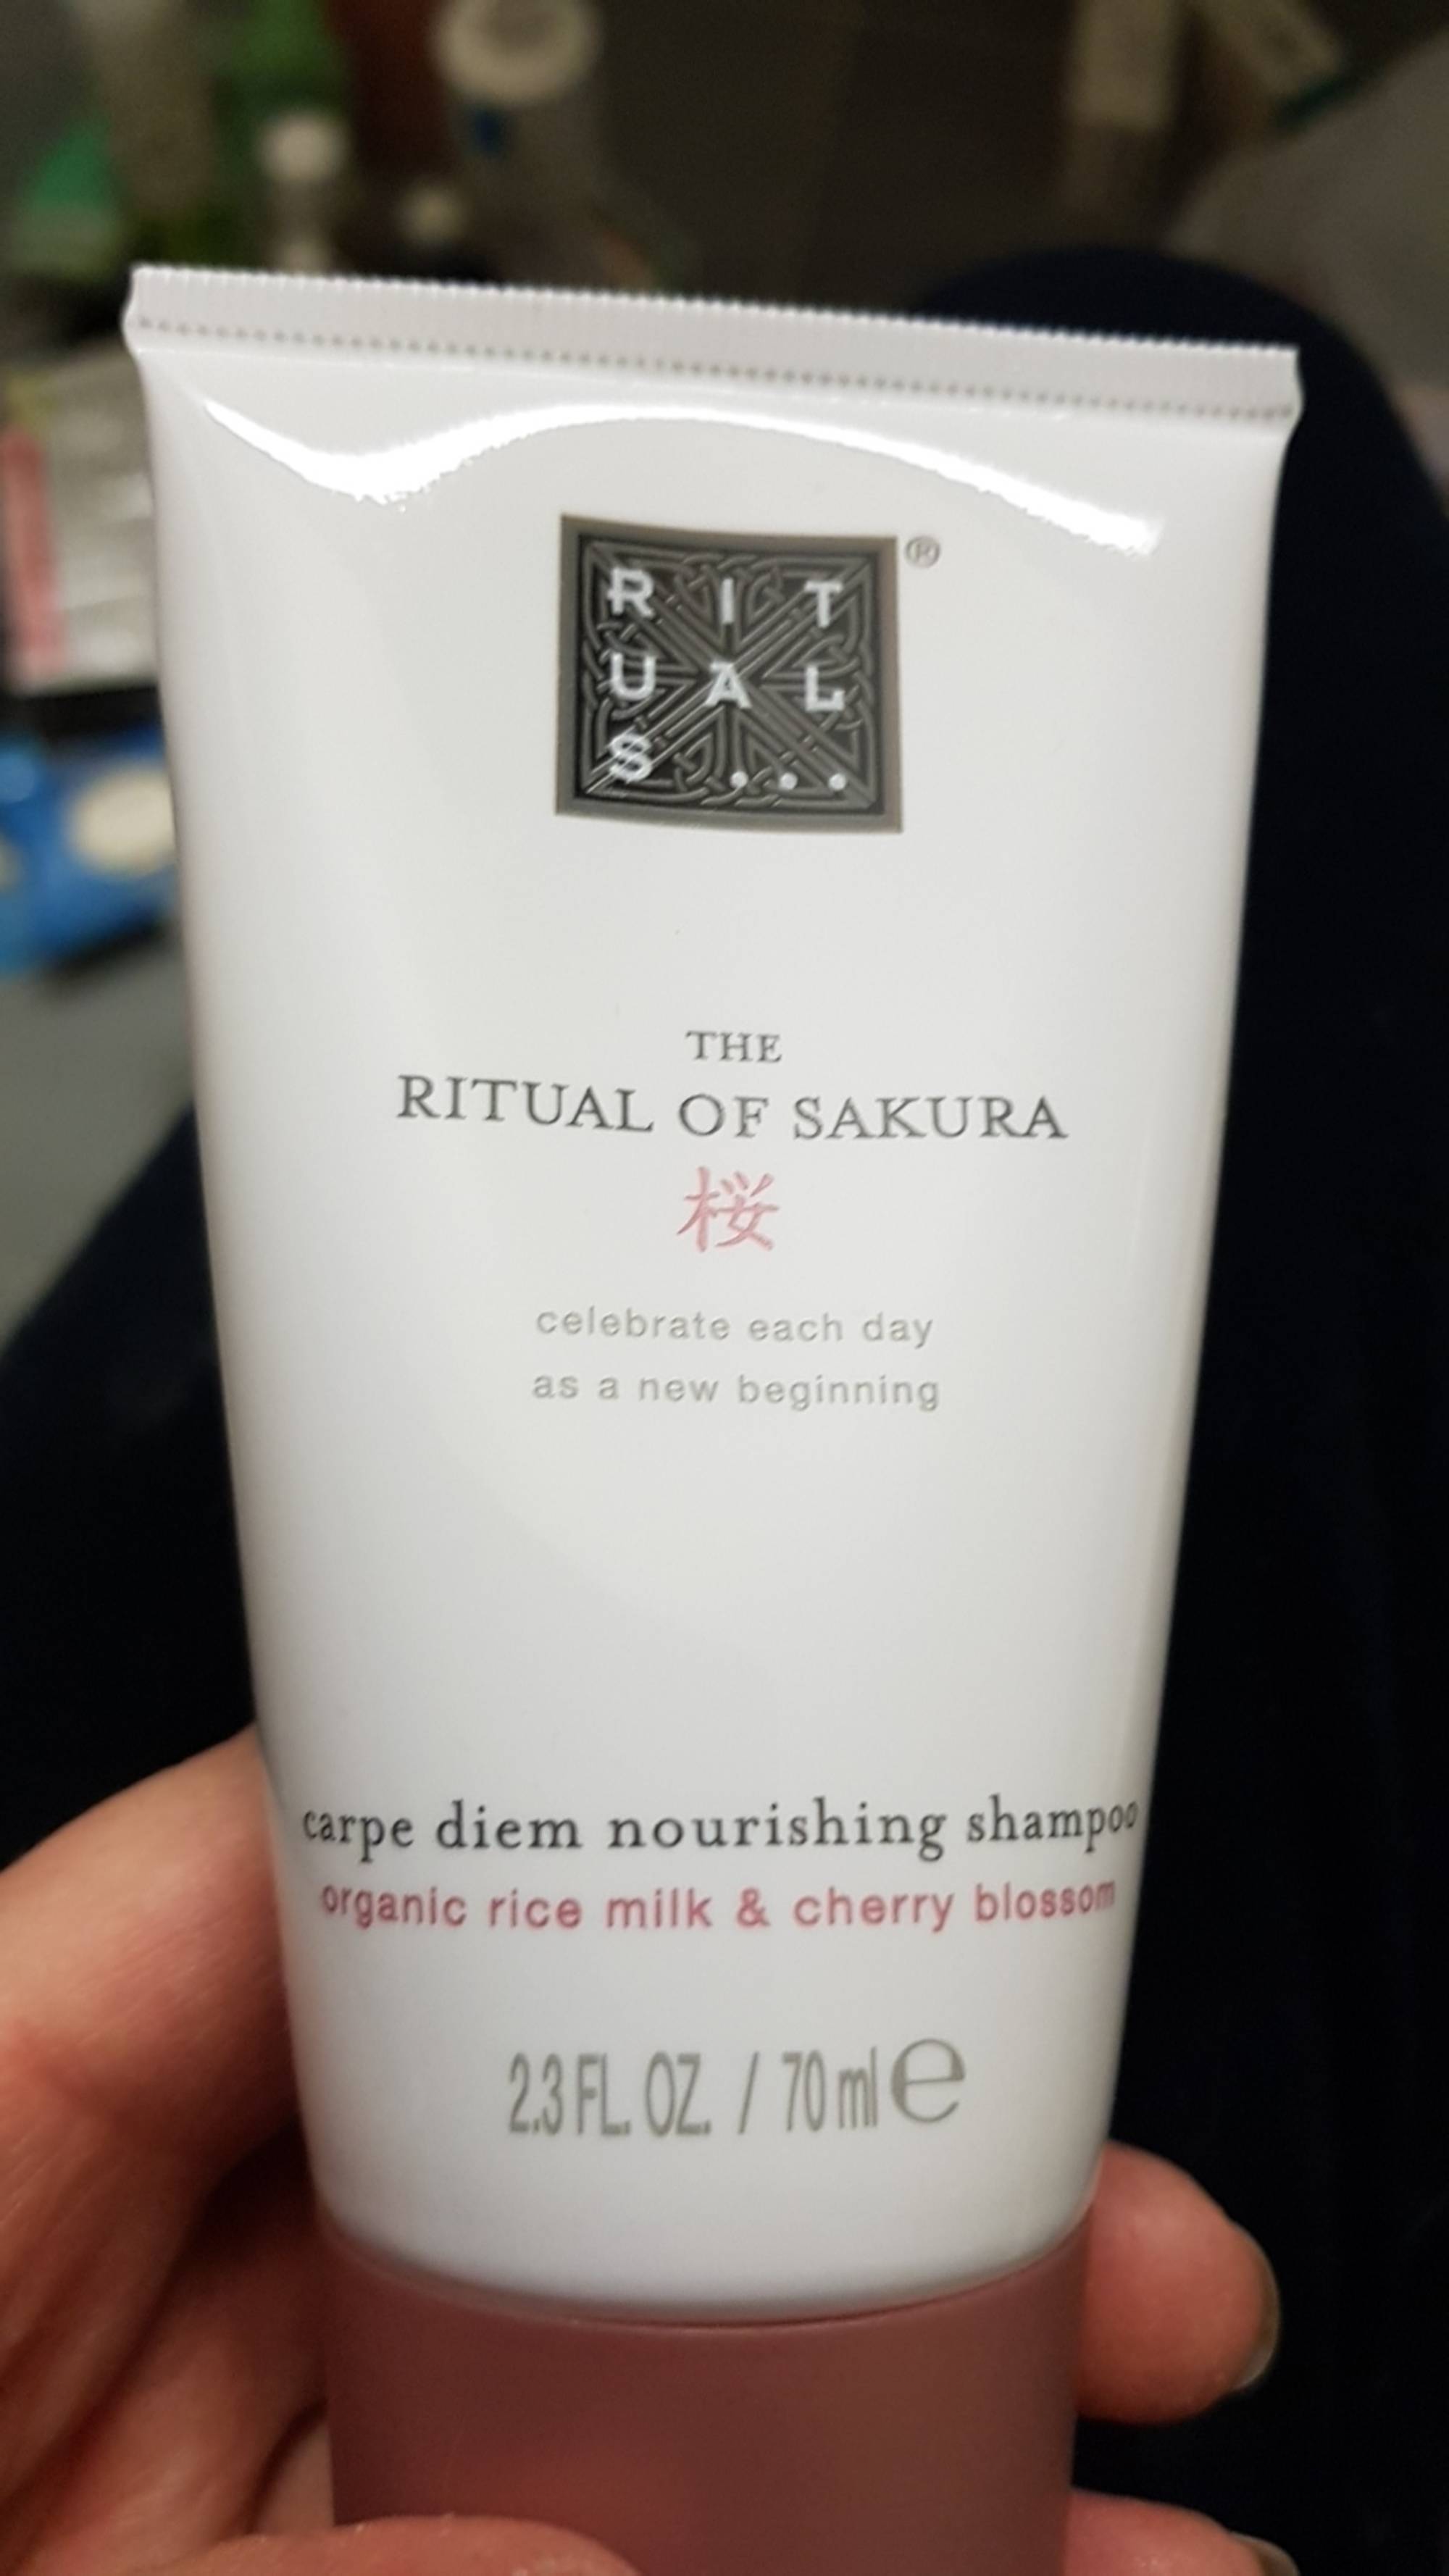 RITUALS - The ritual of sakura - carpe diem nourishing shampoo